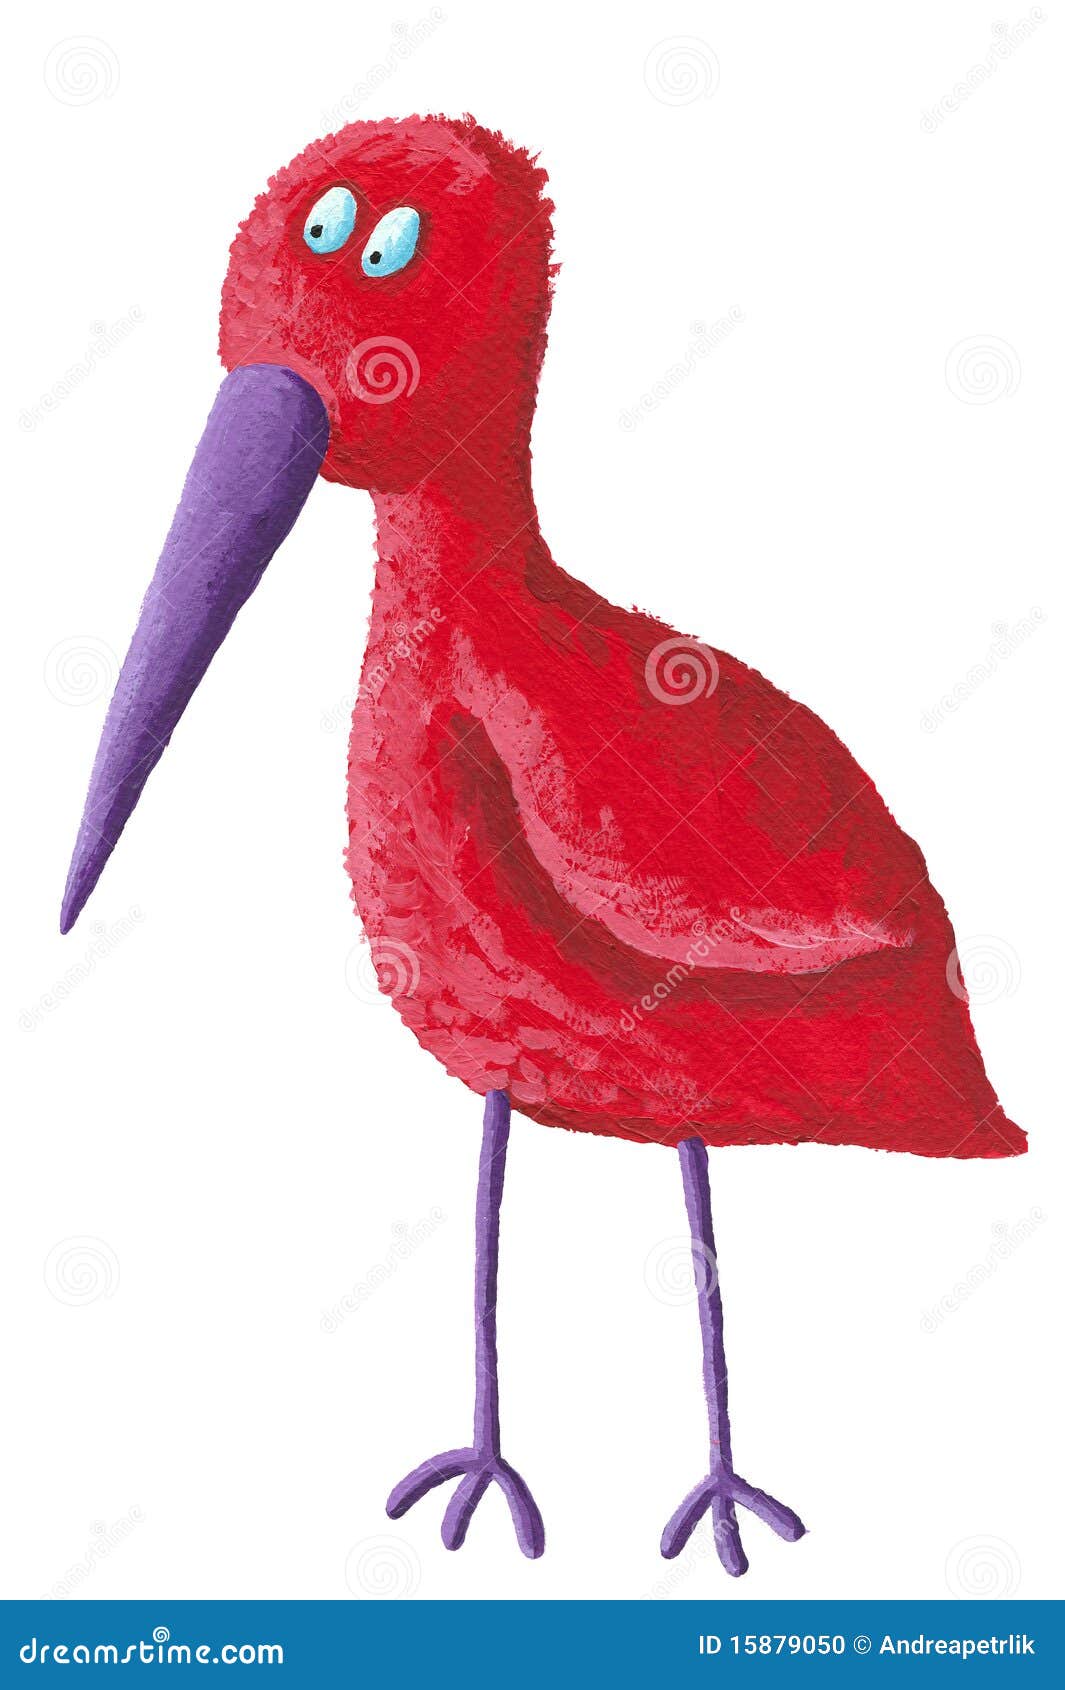 funny red bird with purple beak